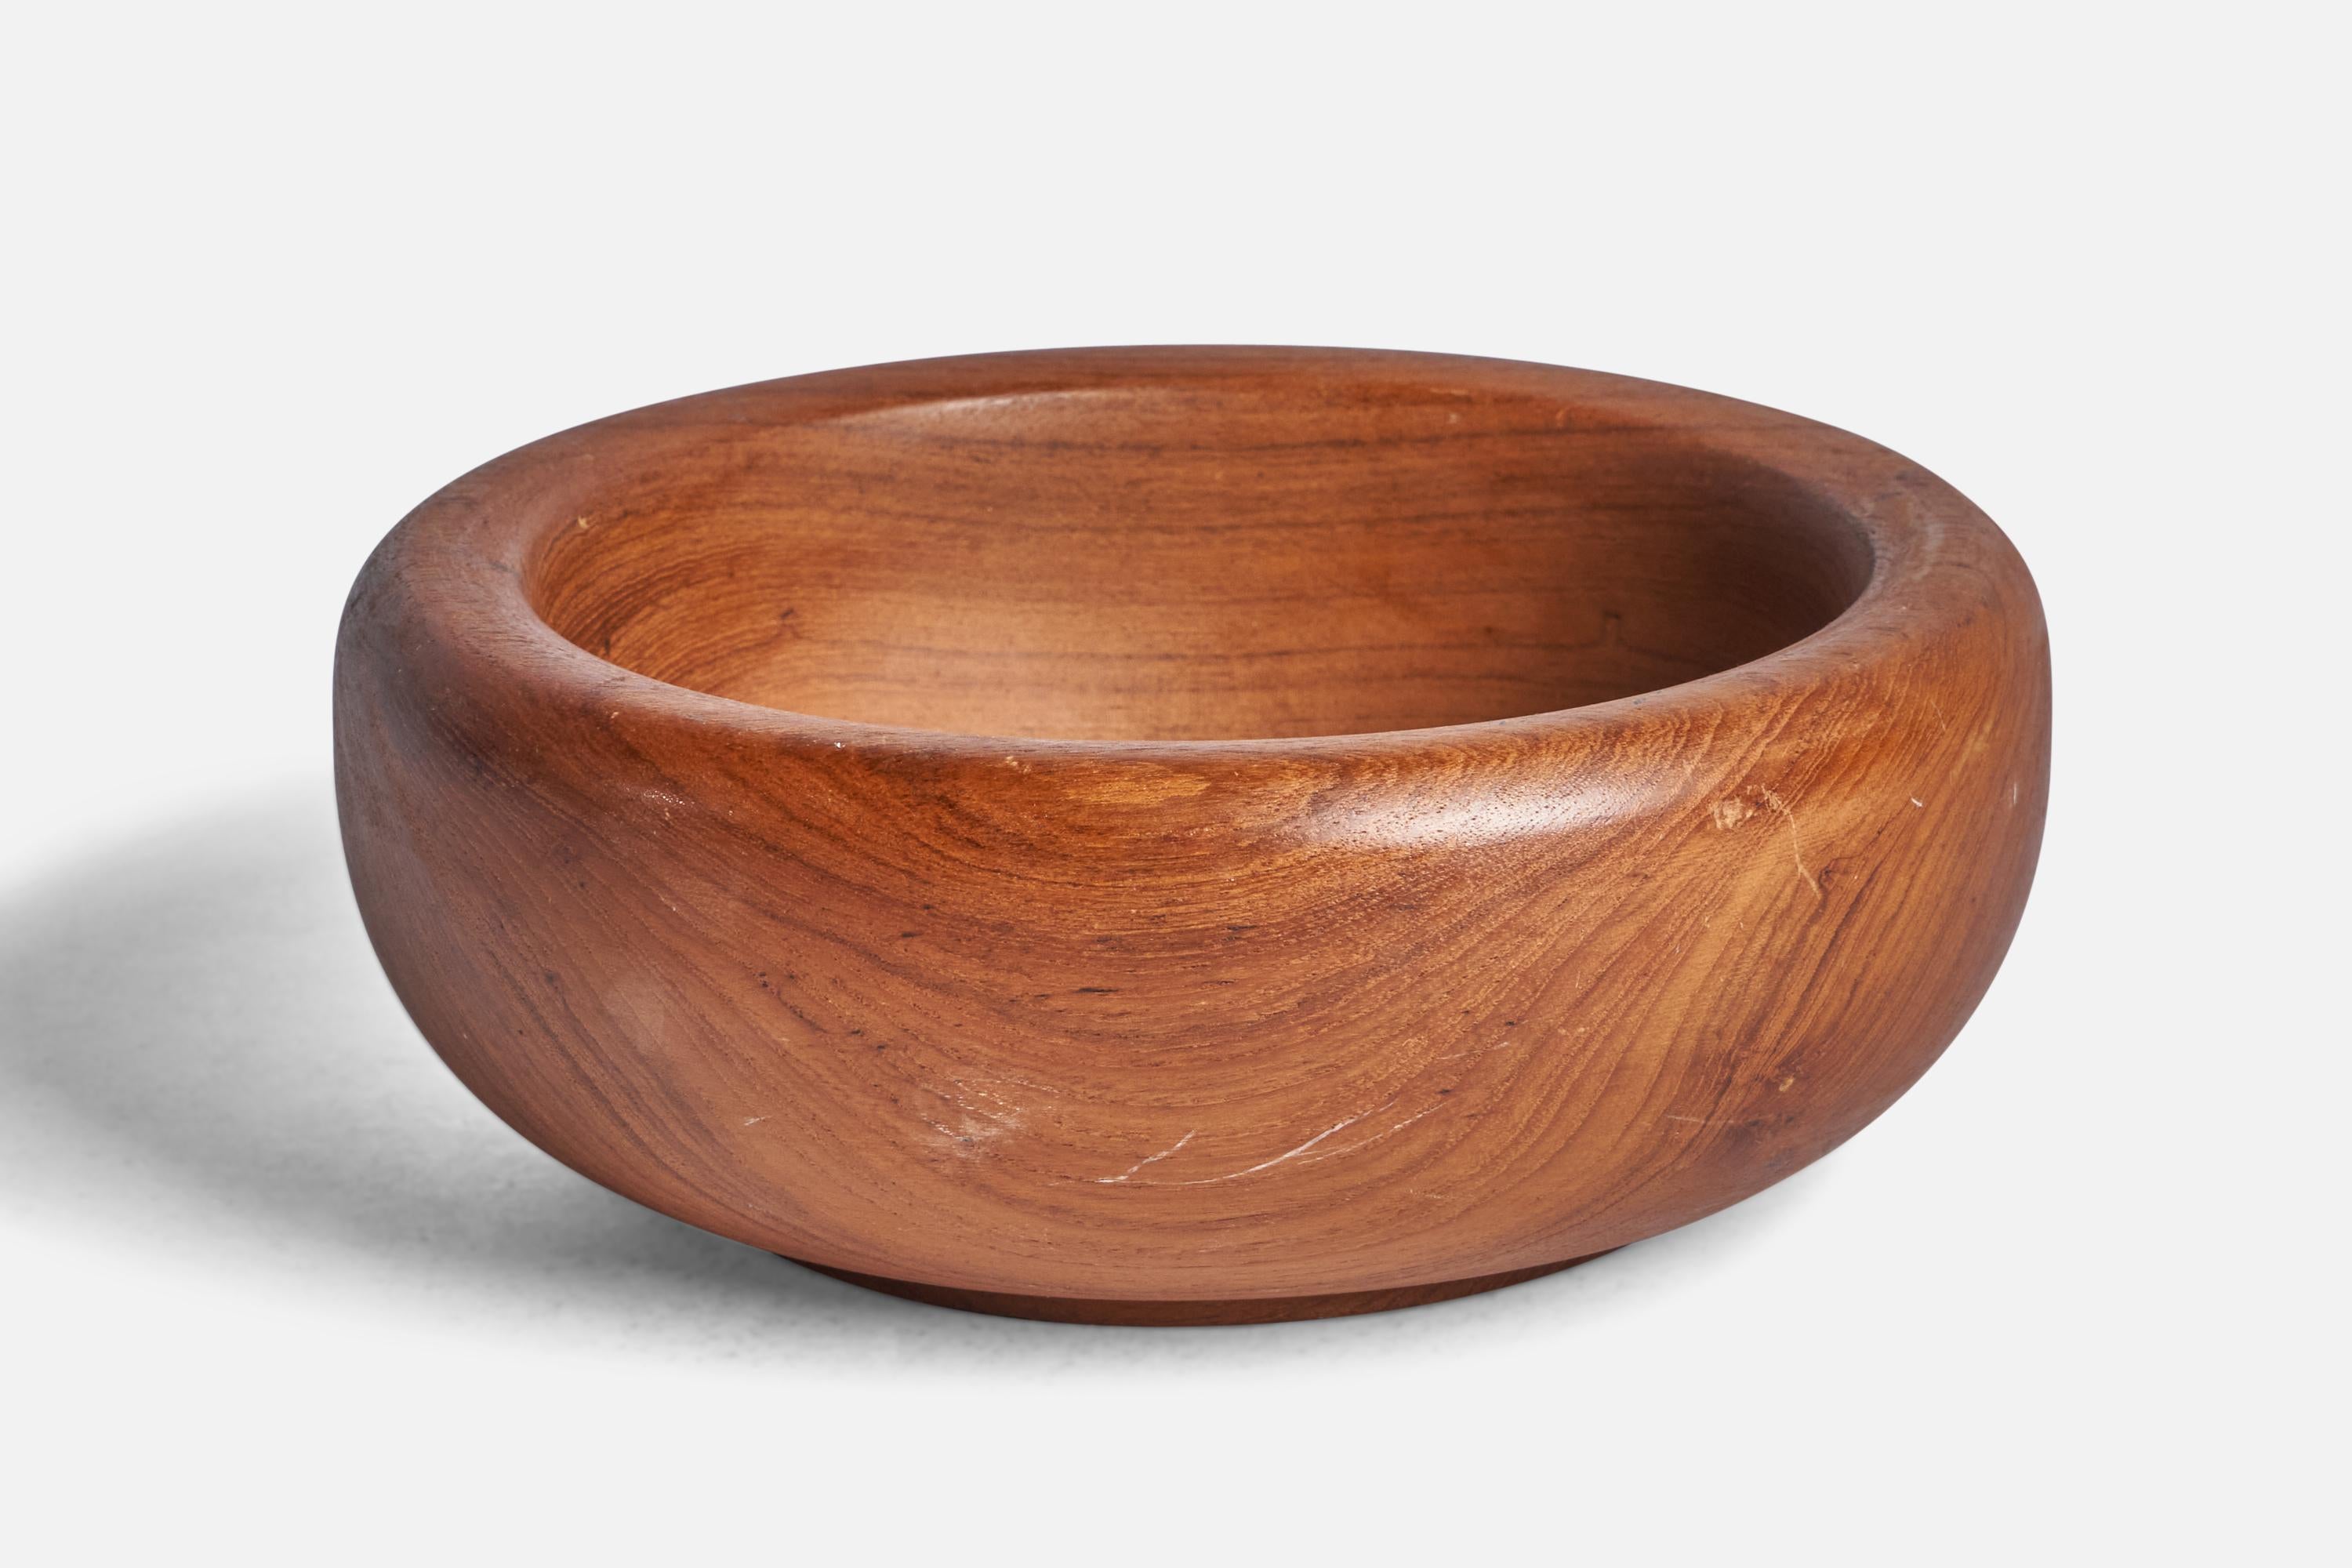 A teak bowl designed and produced in Sweden, c. 1950s.